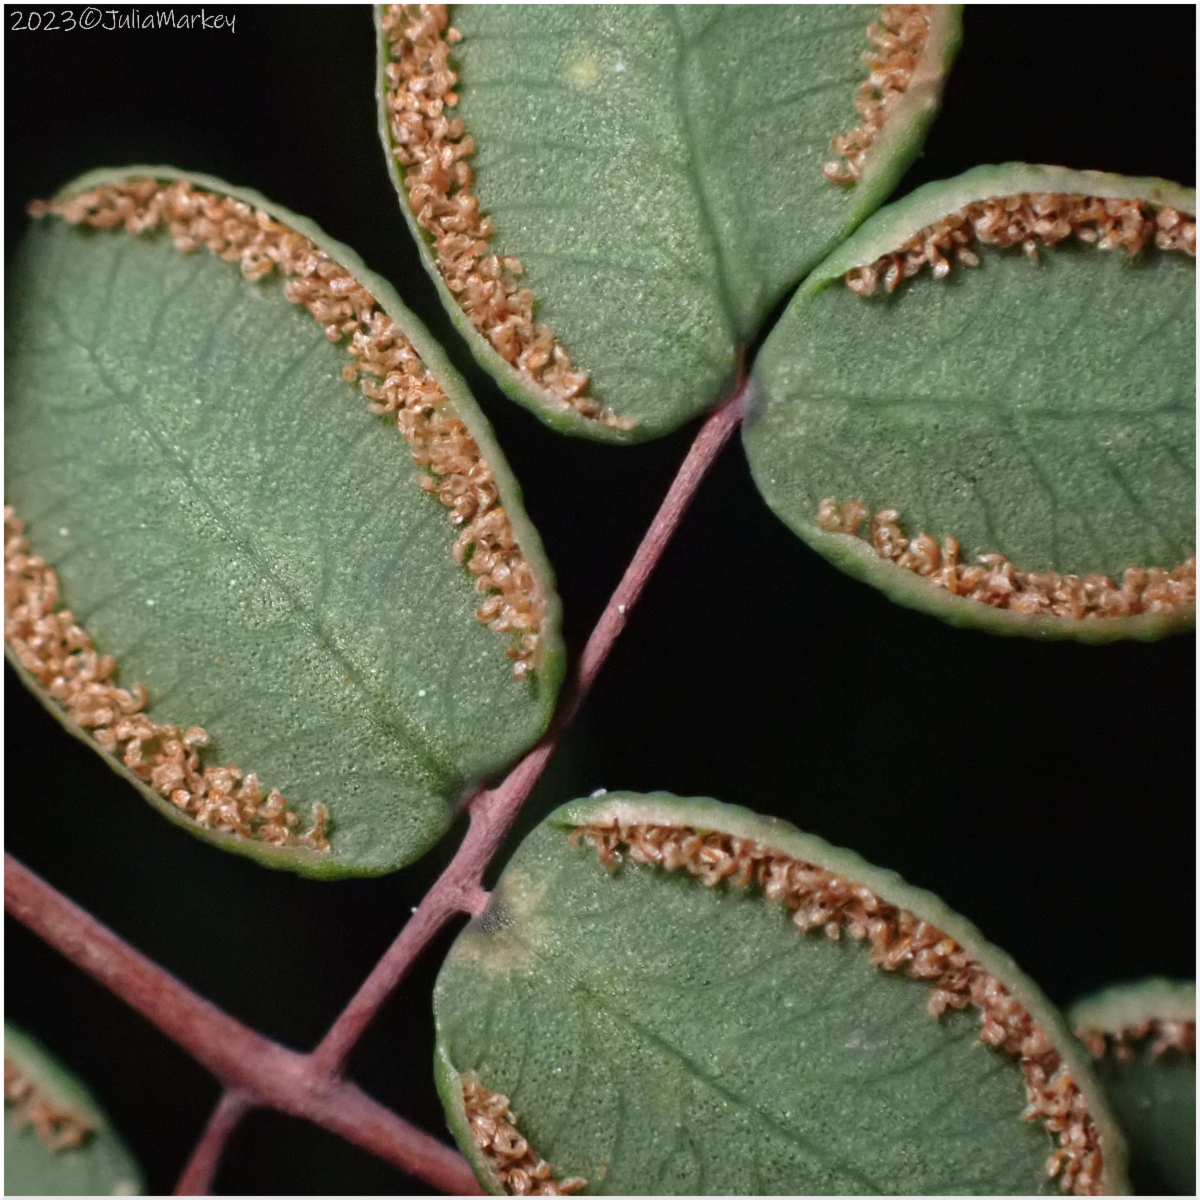 Pellaea andromedifolia